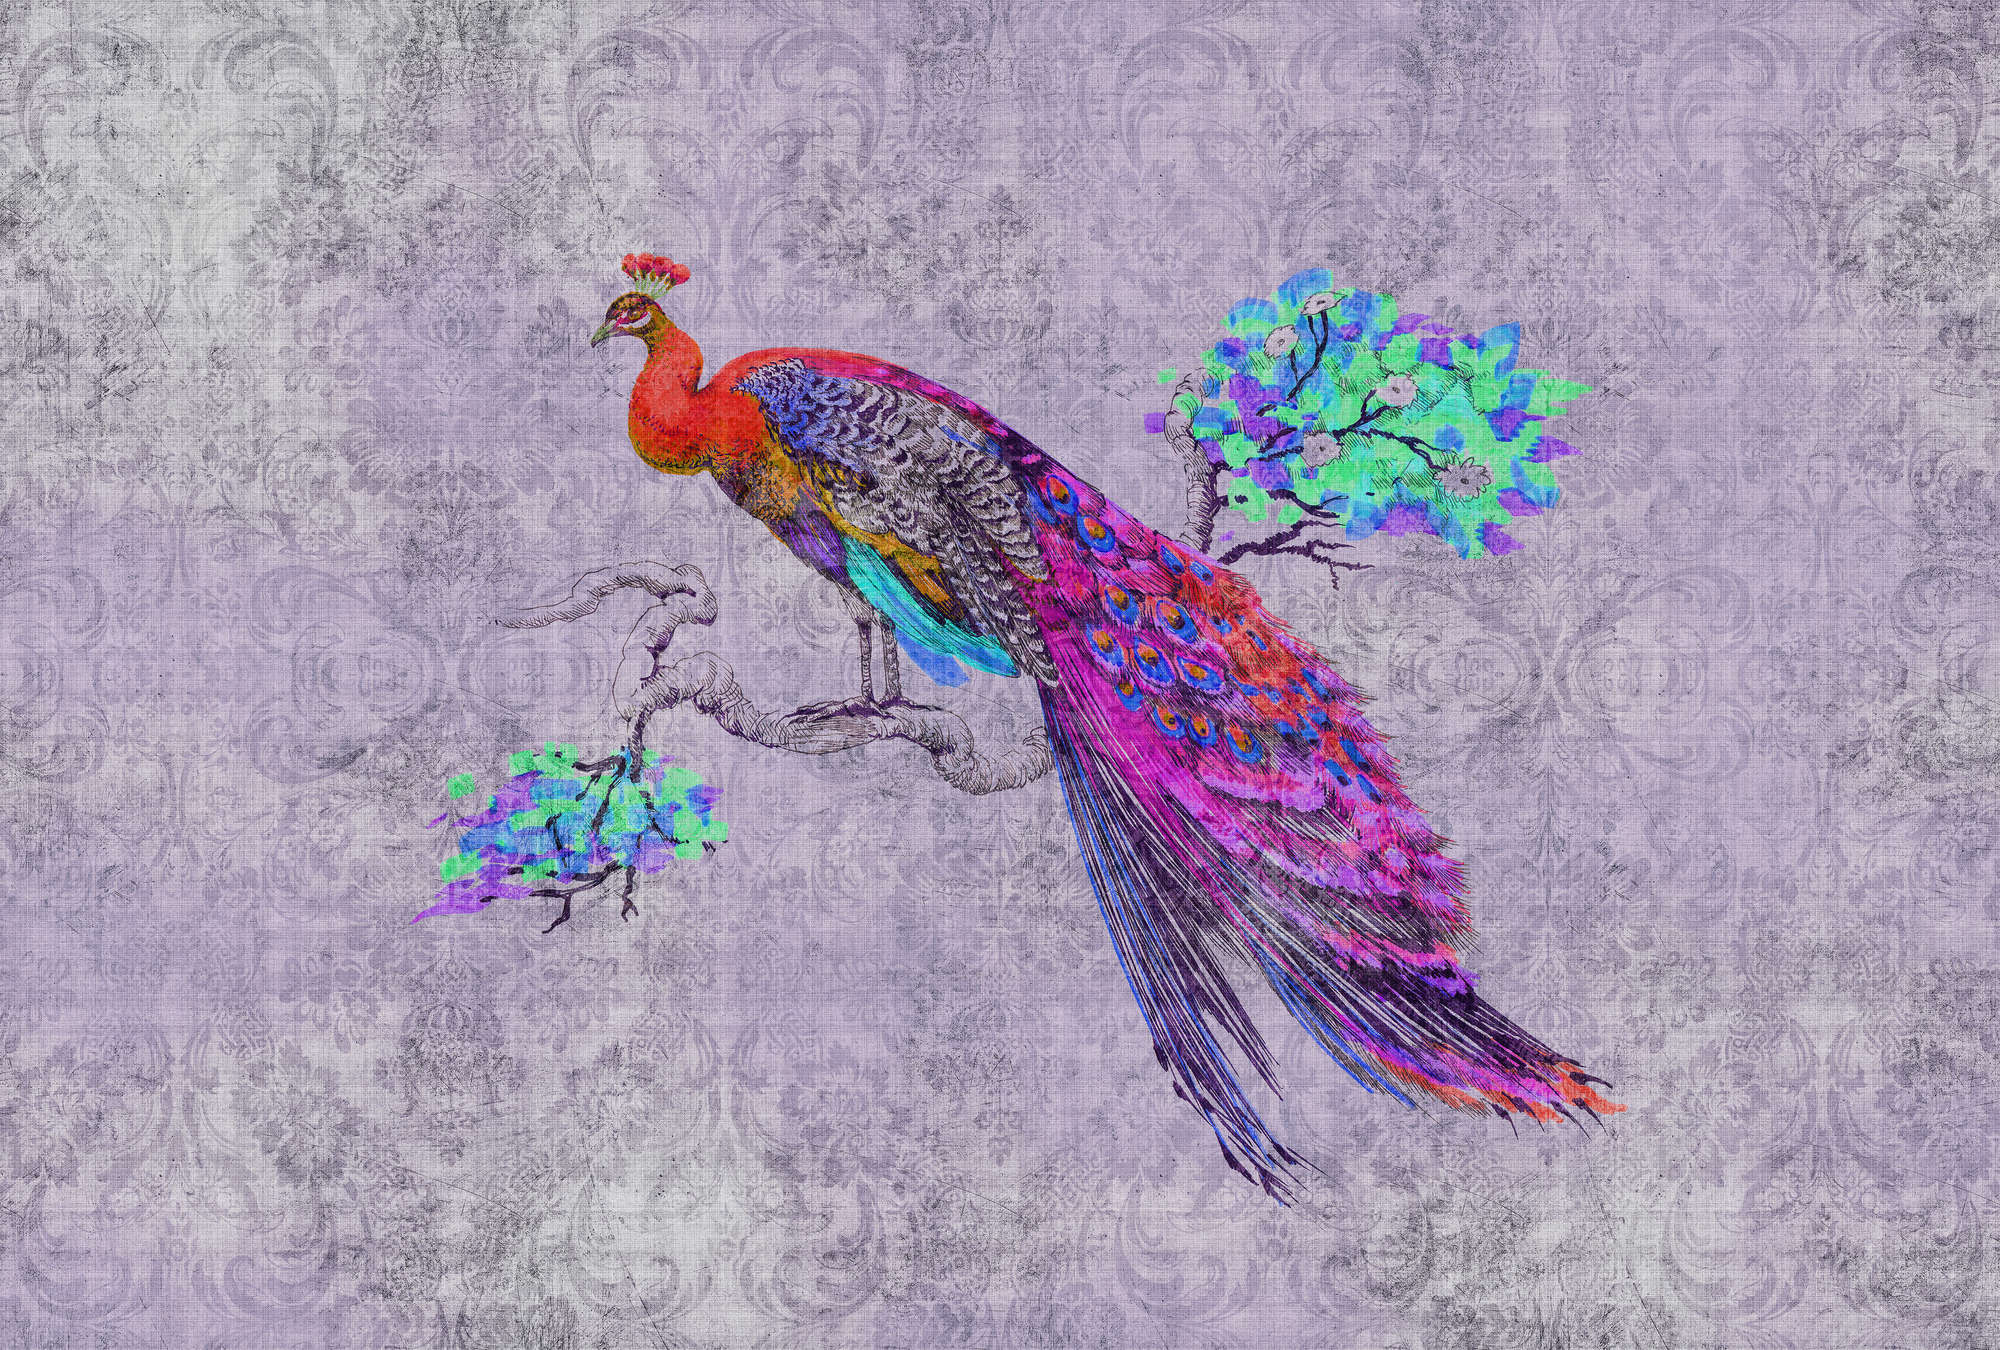             Peacock 3 - Papel Pintado Pavo real de colores - Textura Lino Natural - Azul, Rosa | Perla Liso No Tejido
        